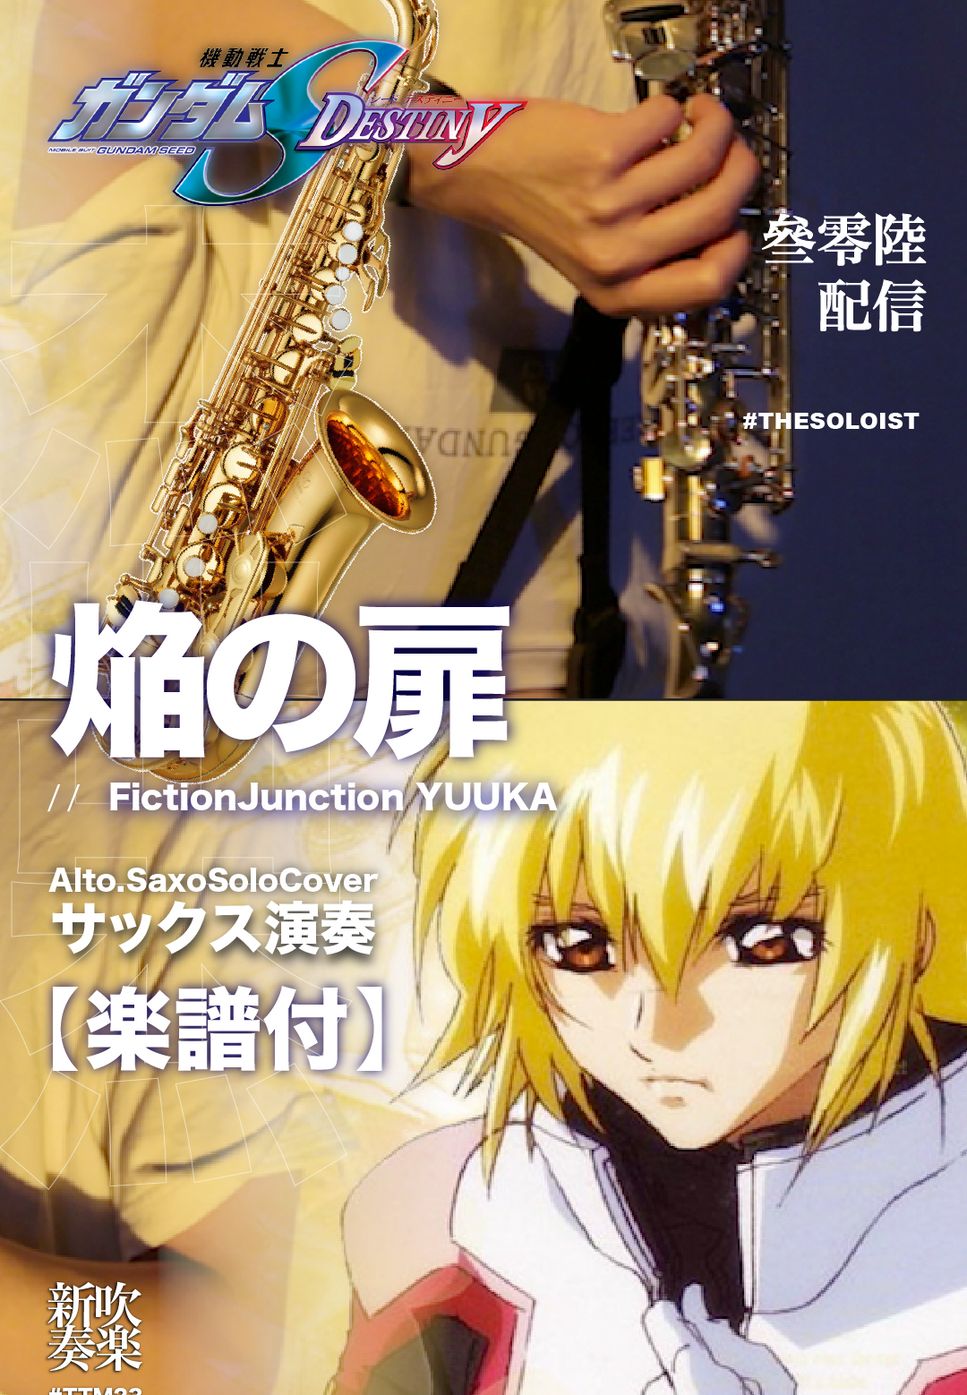 FictionJunction YUUKA - 焔の扉 (C/ Bb/ F/ Eb Solo Sheet Music) by Kit